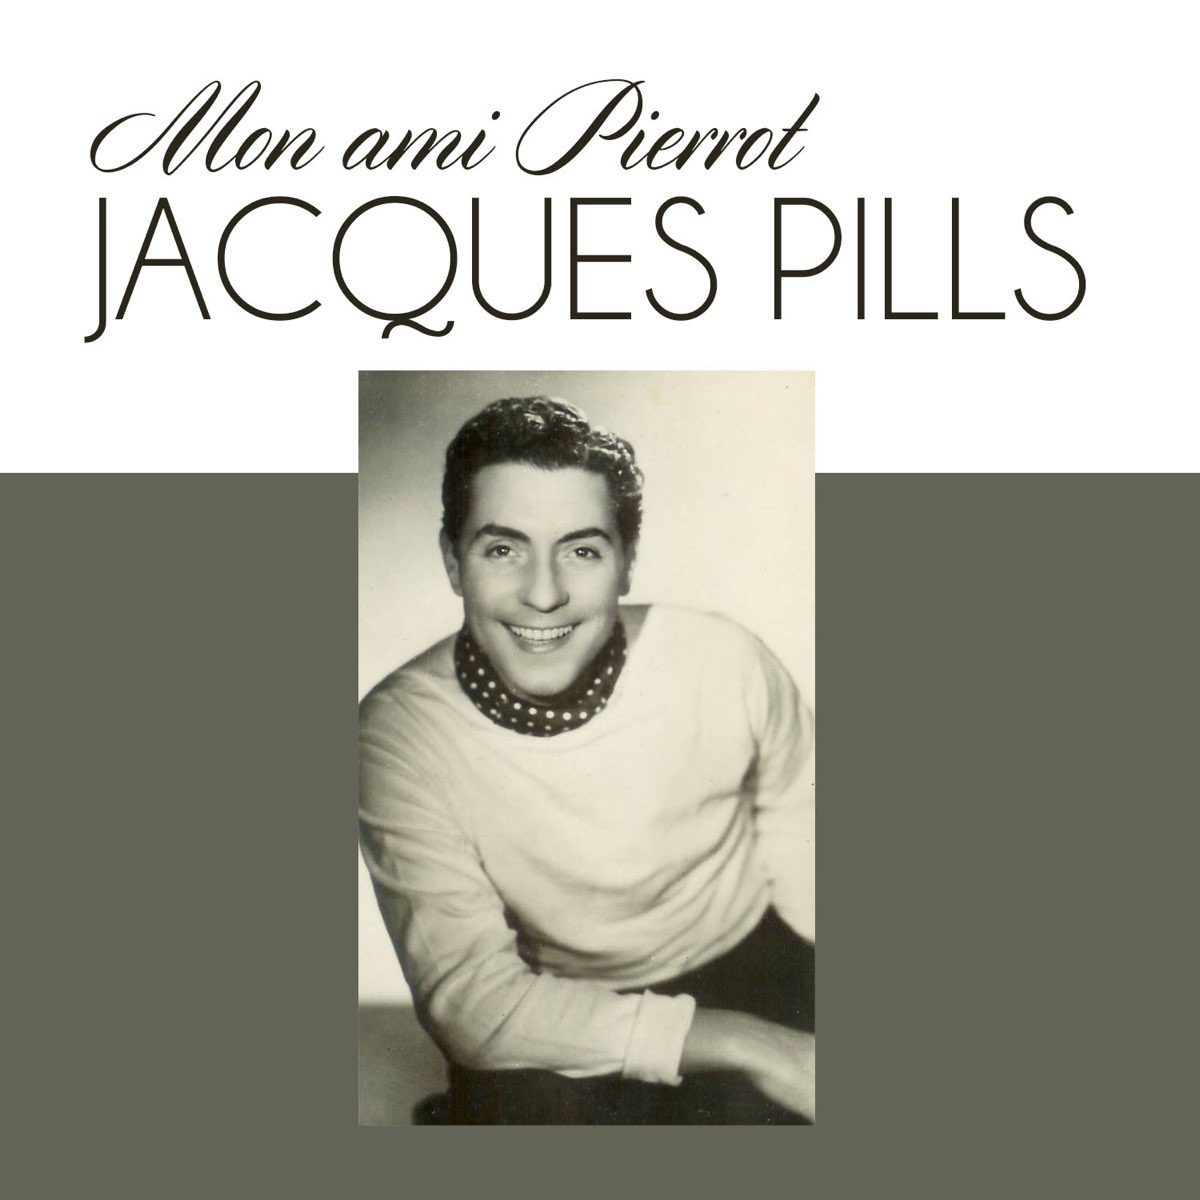 jacques pills 2